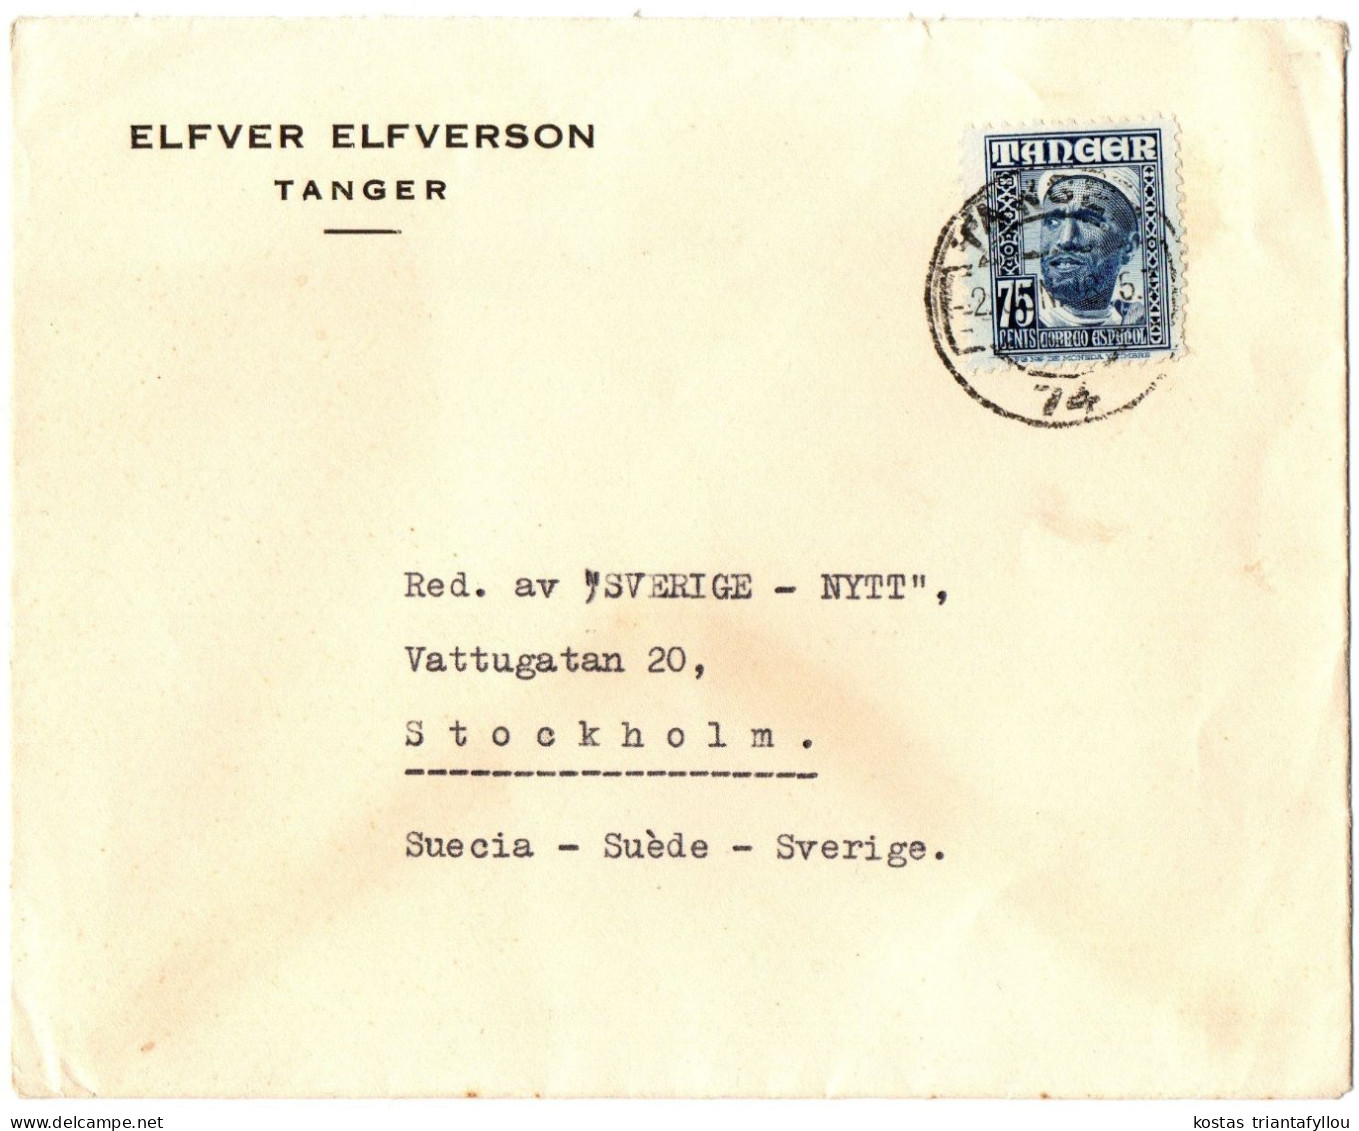 1,56 MOROCCO, TANGER, 1948, COVER TO SWEDEN - Spaans-Marokko